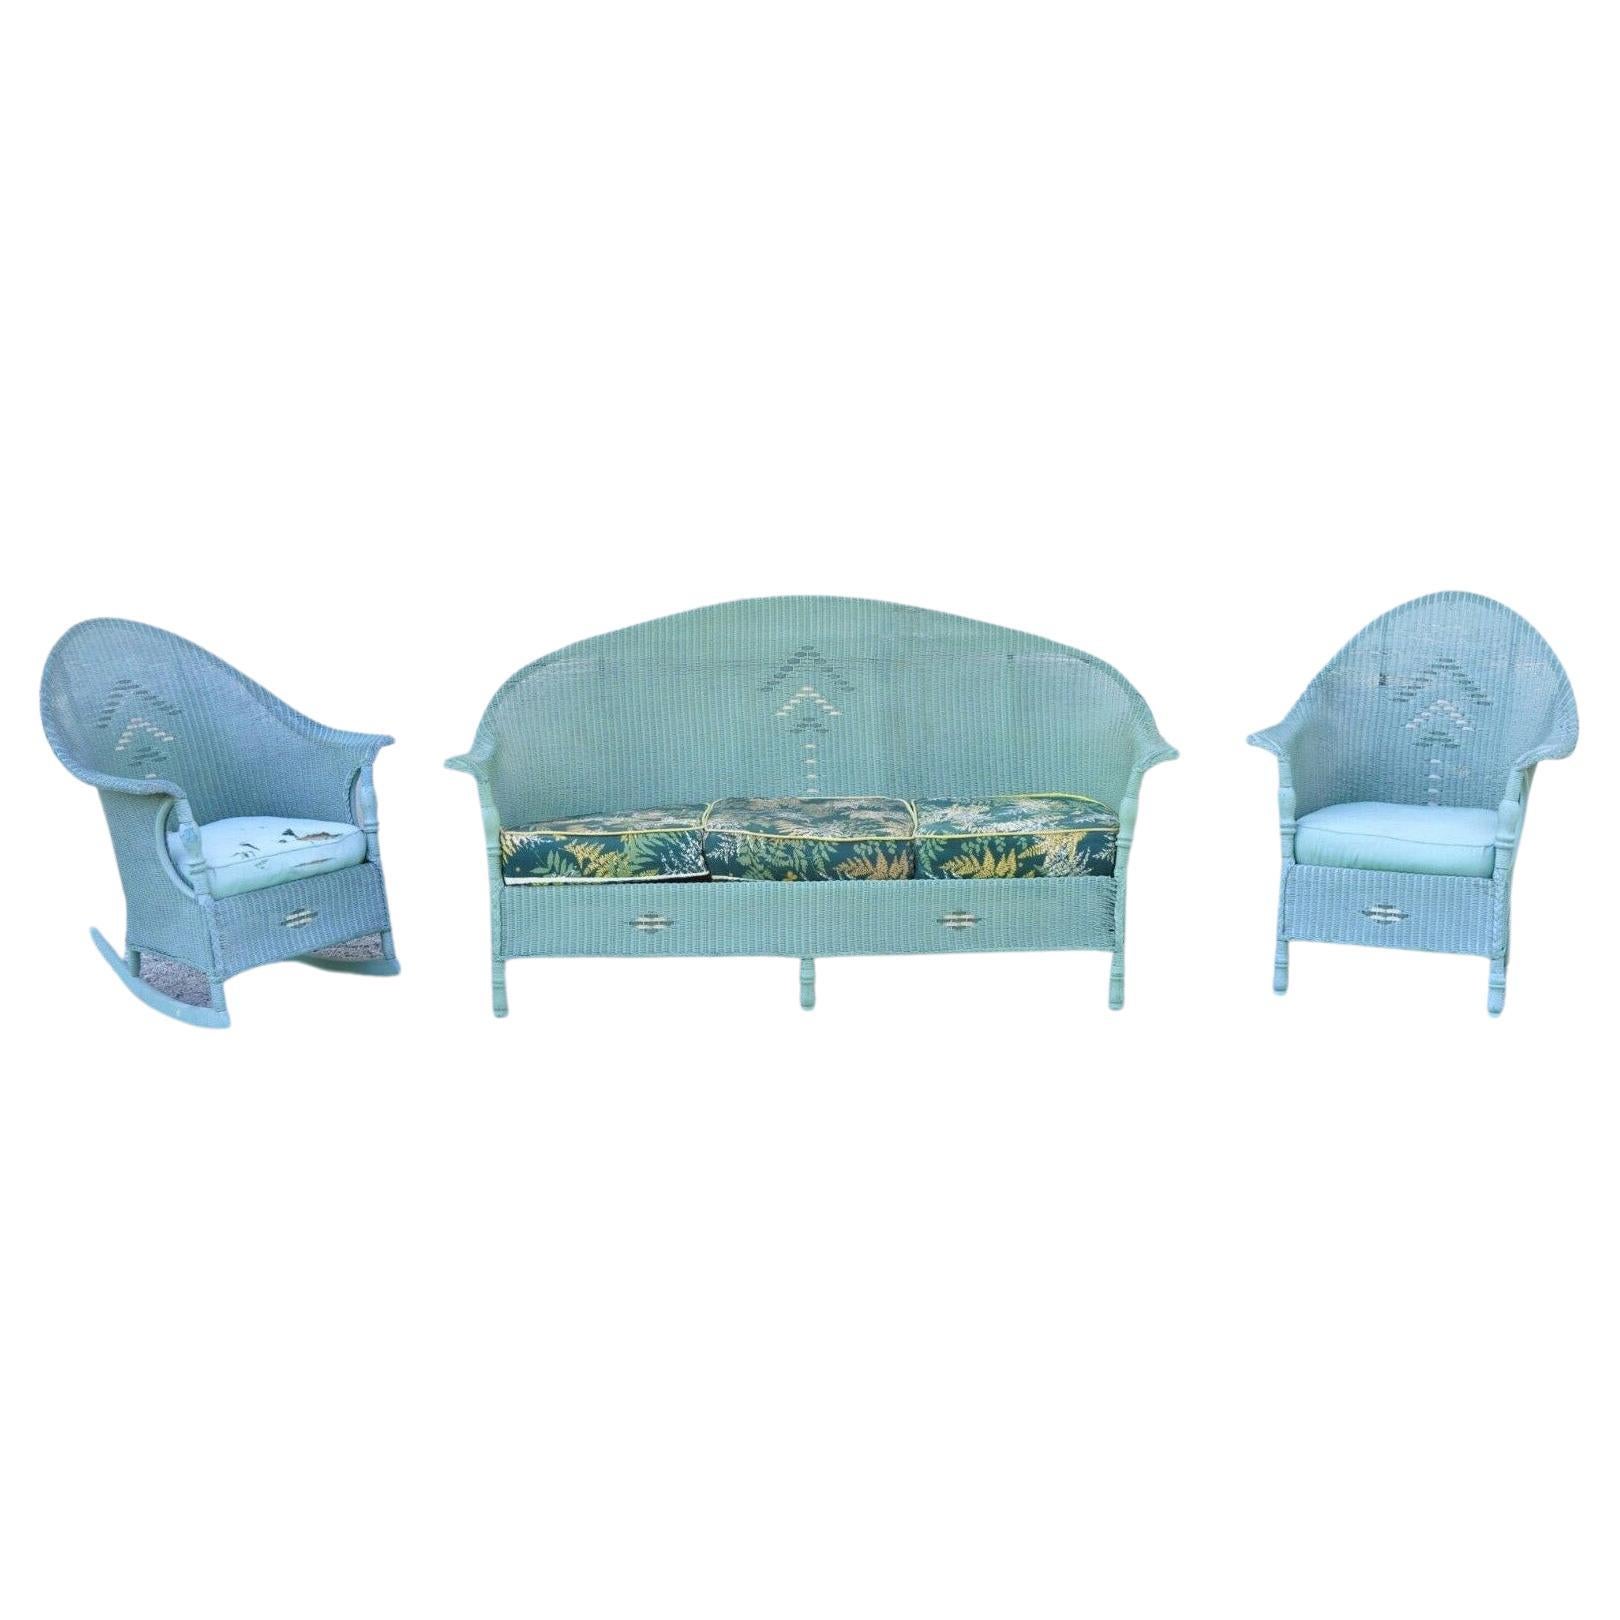 Viktorianisches blau-grünes gewebtes Korbweide-Sofa, Sonnenzimmer-Sofa, Schaukelstuhl, Loungesessel, 3 Teile